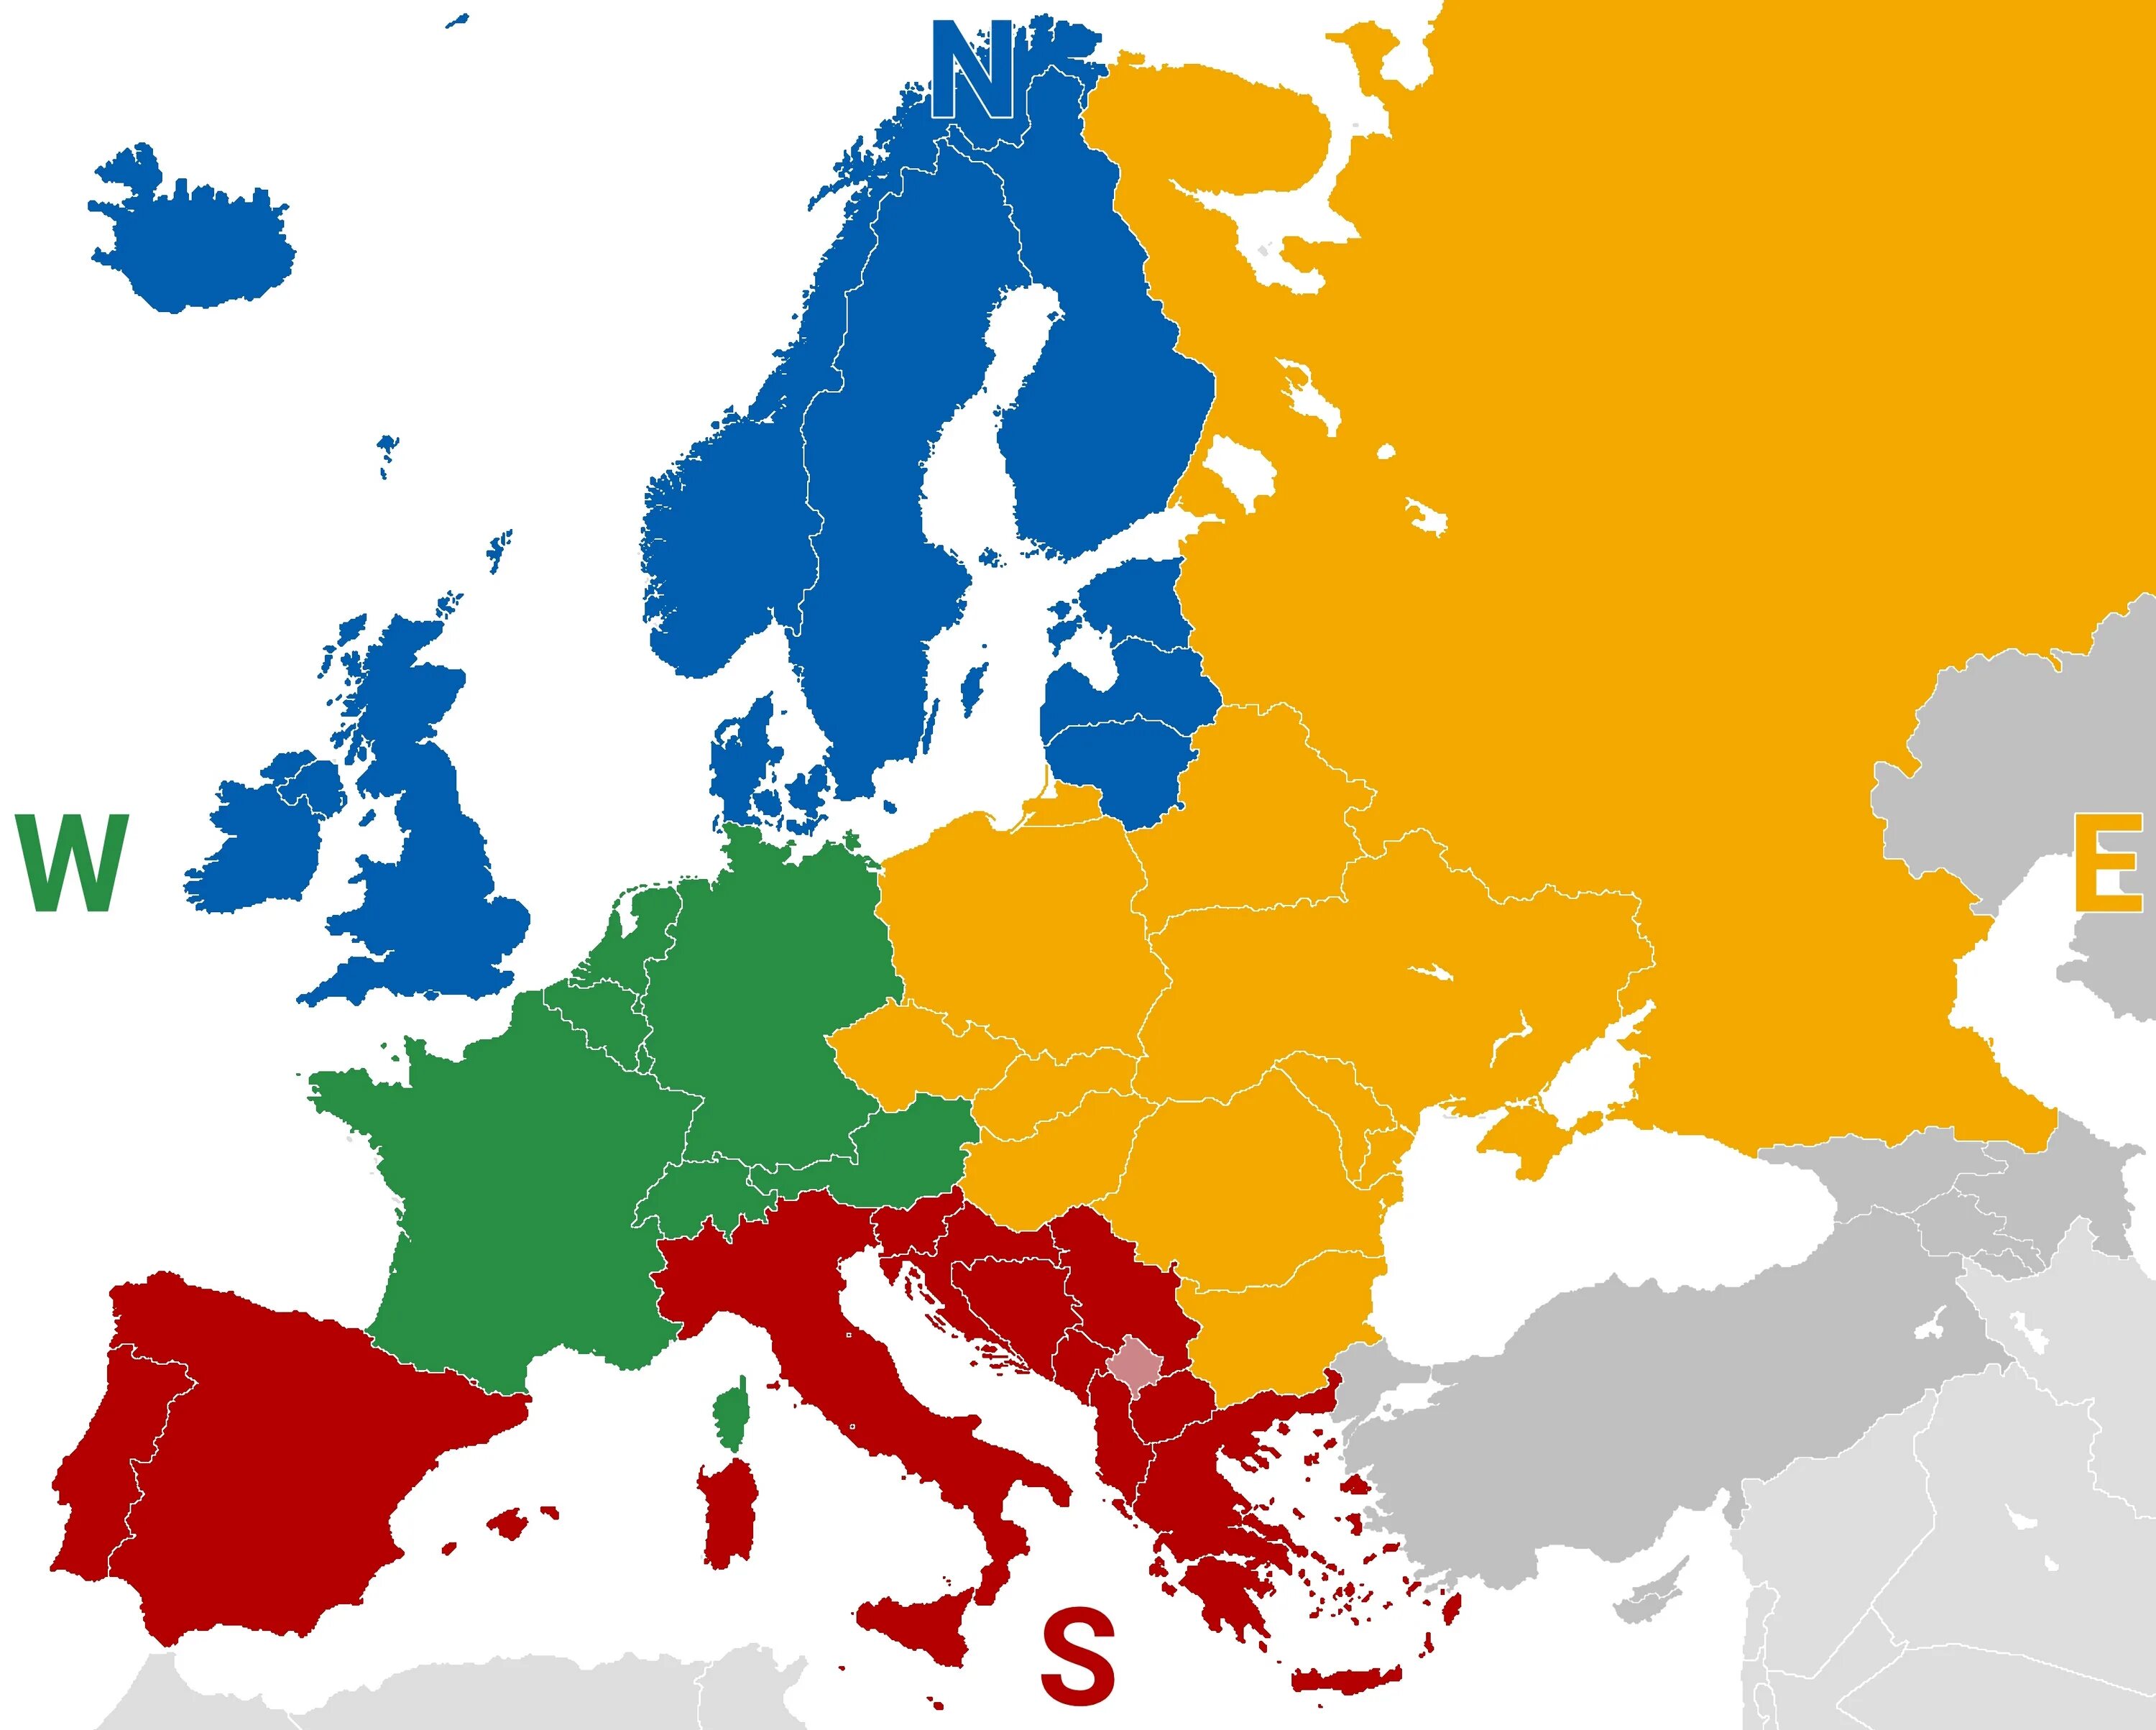 Region eu. Северная Европа Южная Европа Западная Европа Восточная Европа. Северная Европа Южная Европа Западная Европа Восточная Европа карта. Европа Северная Южная Западная Восточная. Южная Европа Западная Европа Восточная Европа на карте.